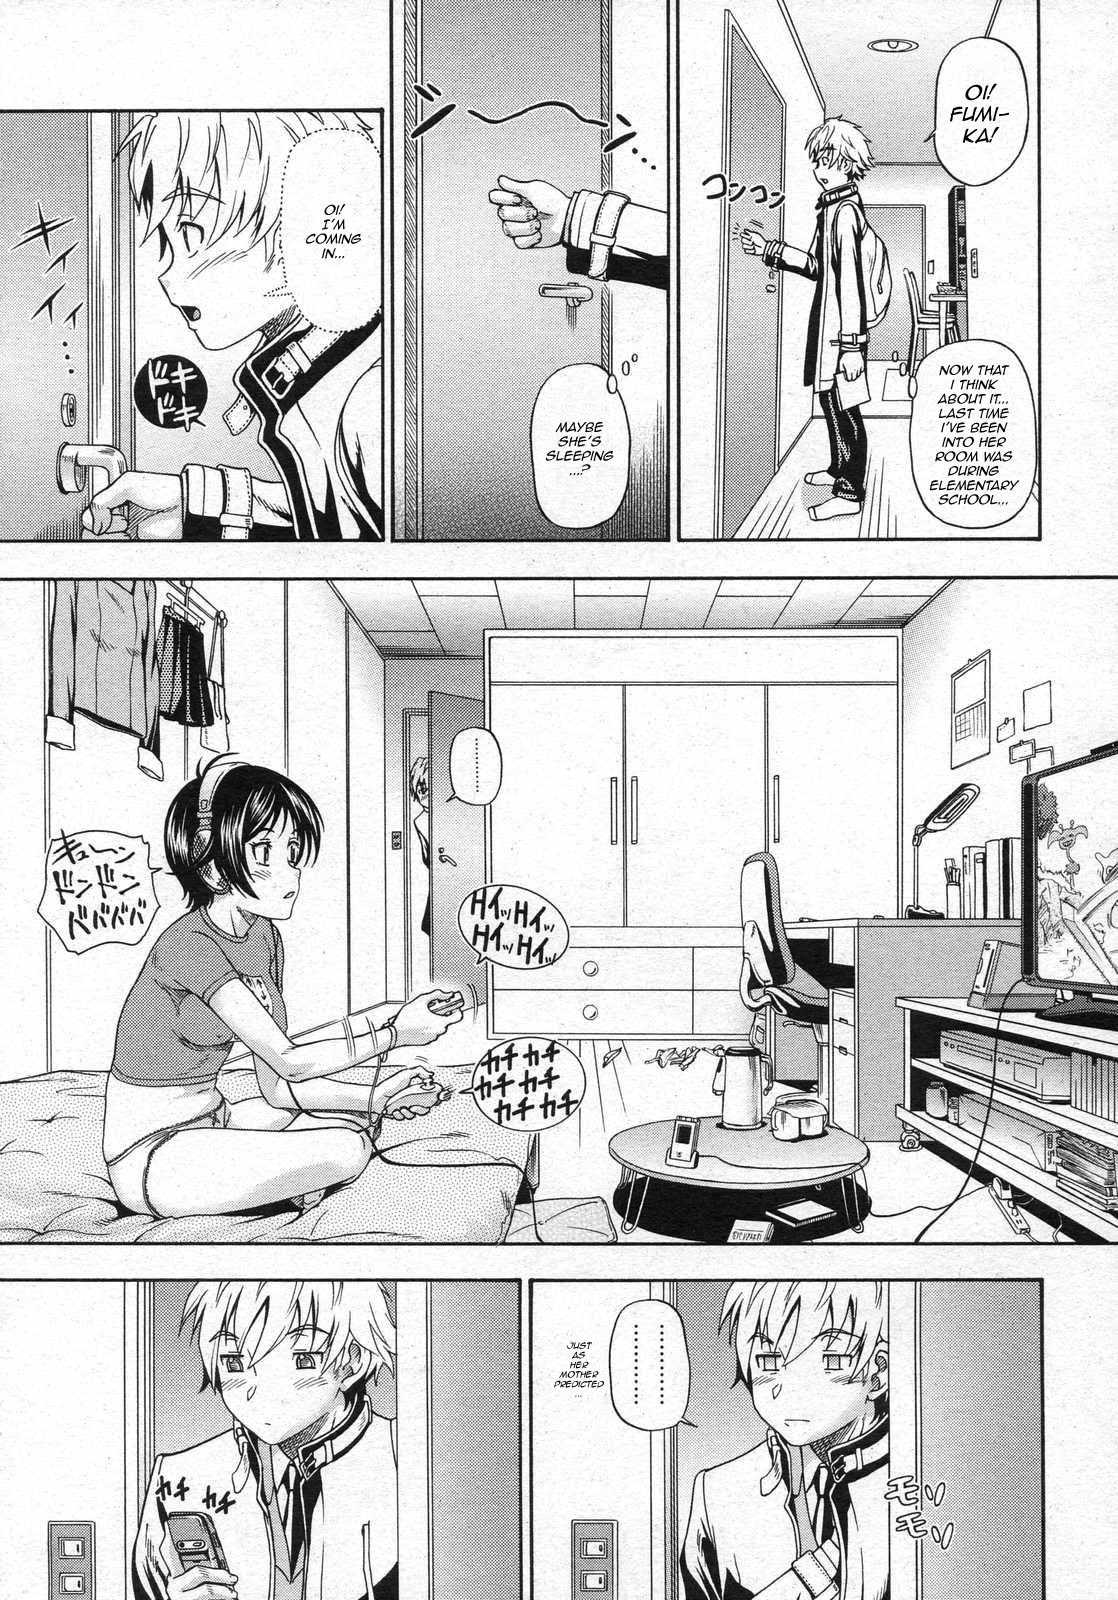 Soushisouai Note 40 hentai manga